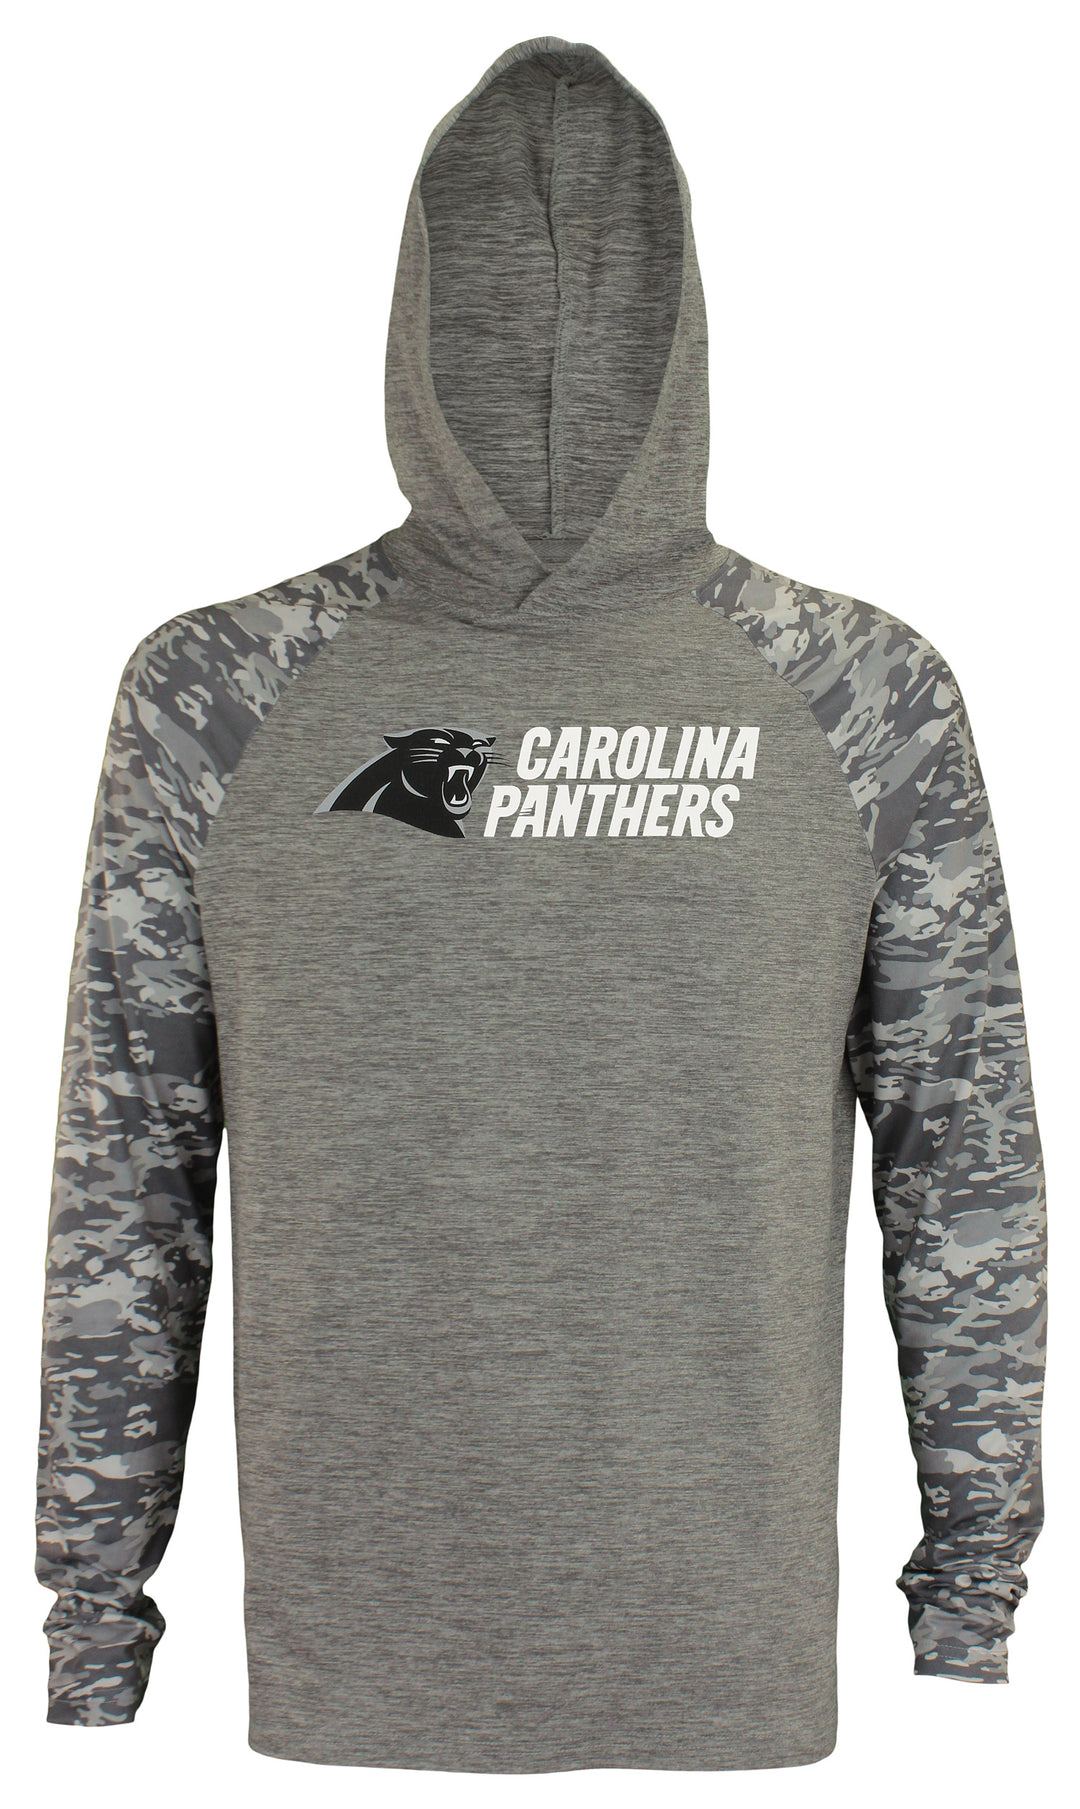 Zubaz NFL Carolina Panthers Lightweight Long Sleeve Space Dye Hoody